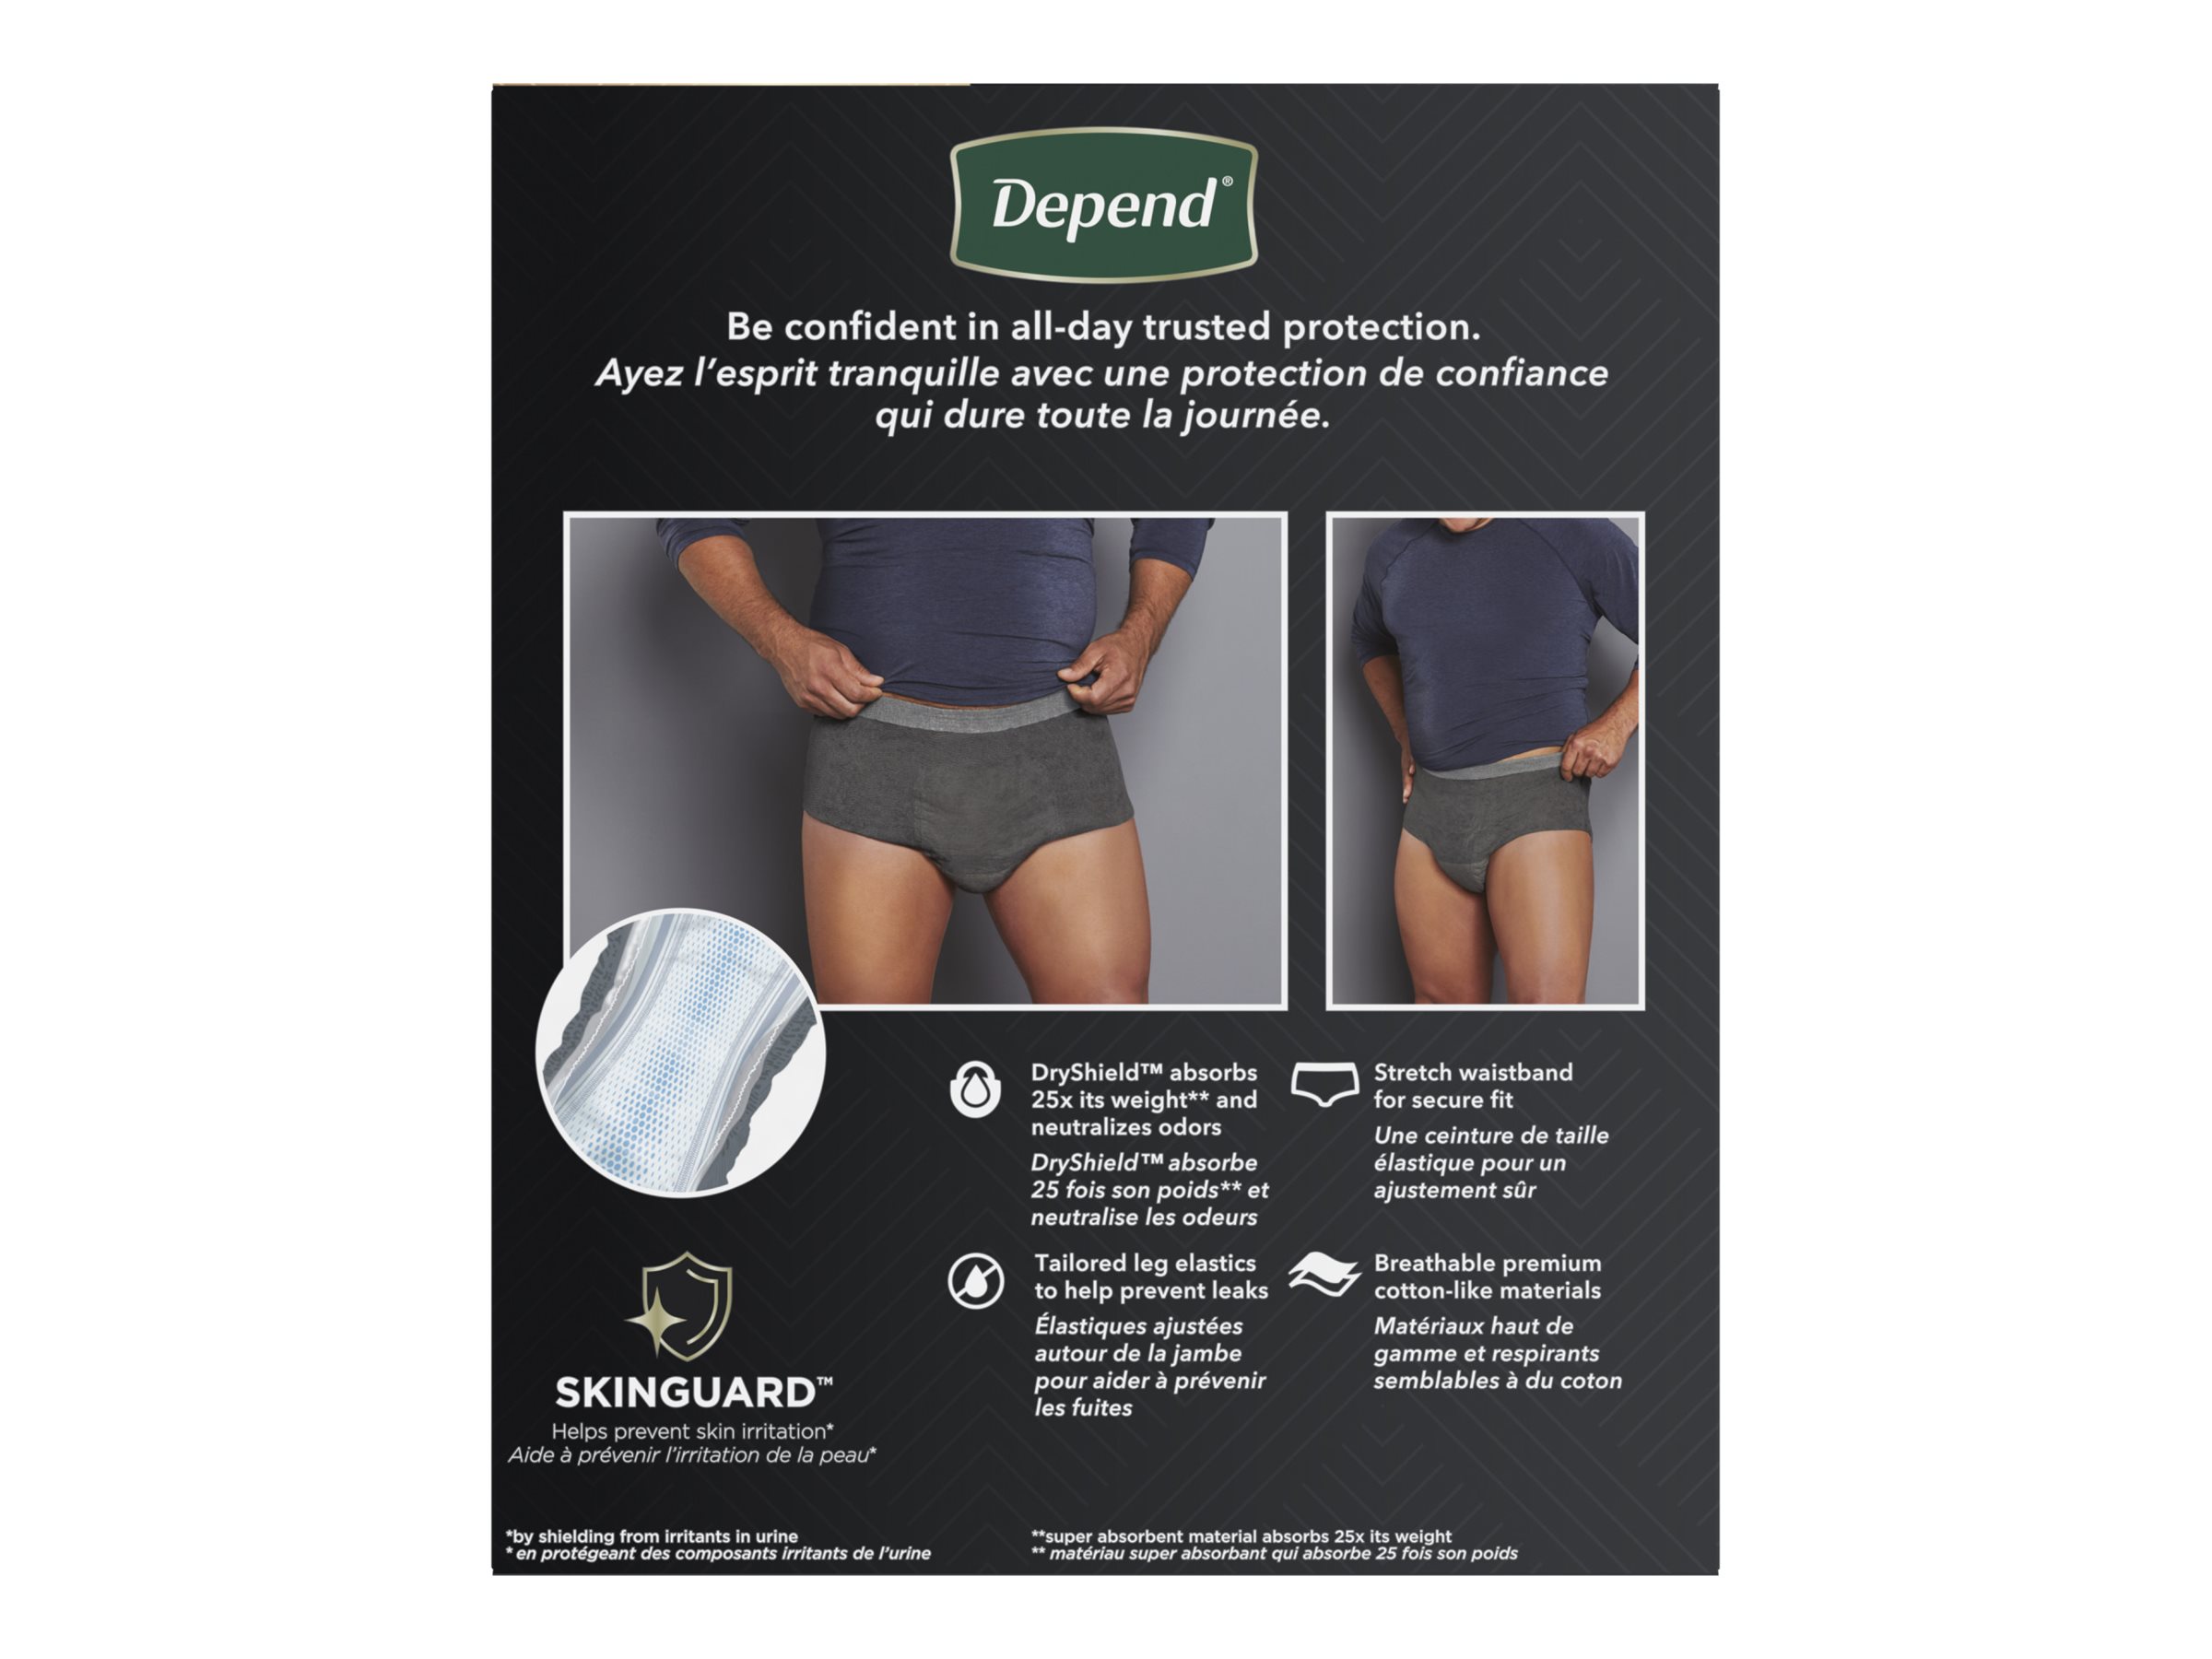 Depend Men's Real Fit Skinguard Incontinence Underwear Maximum L